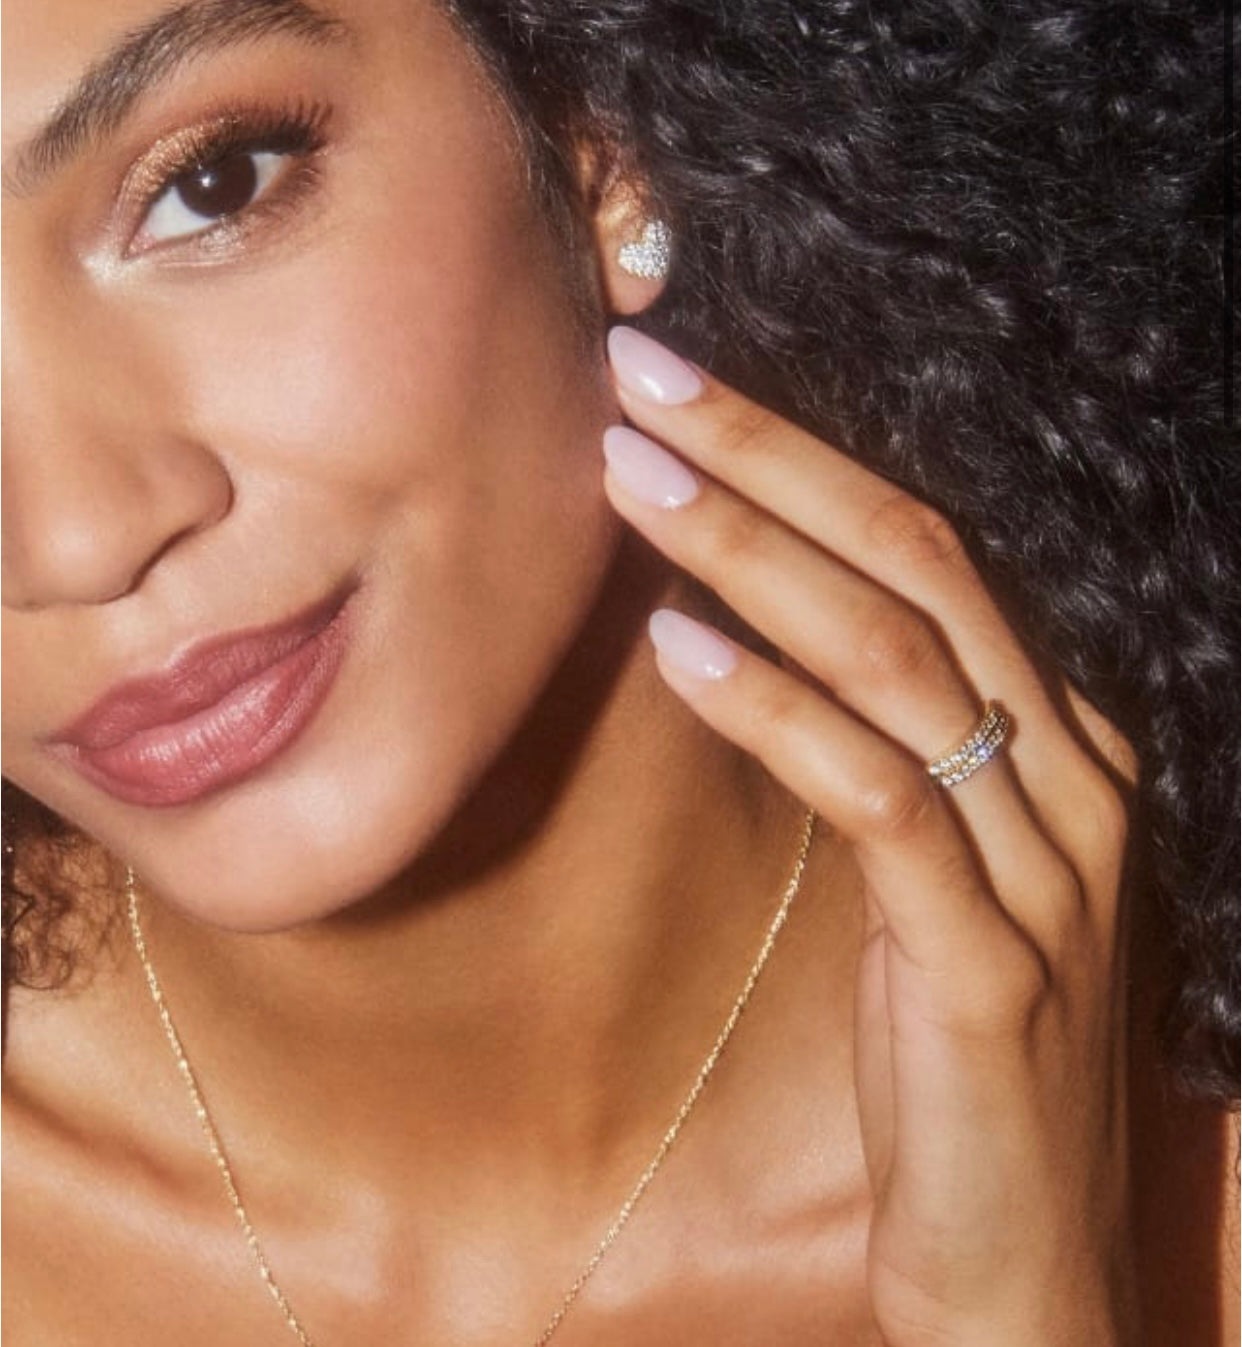 Ari White Crystal Heart Gold Pave Stud Earrings